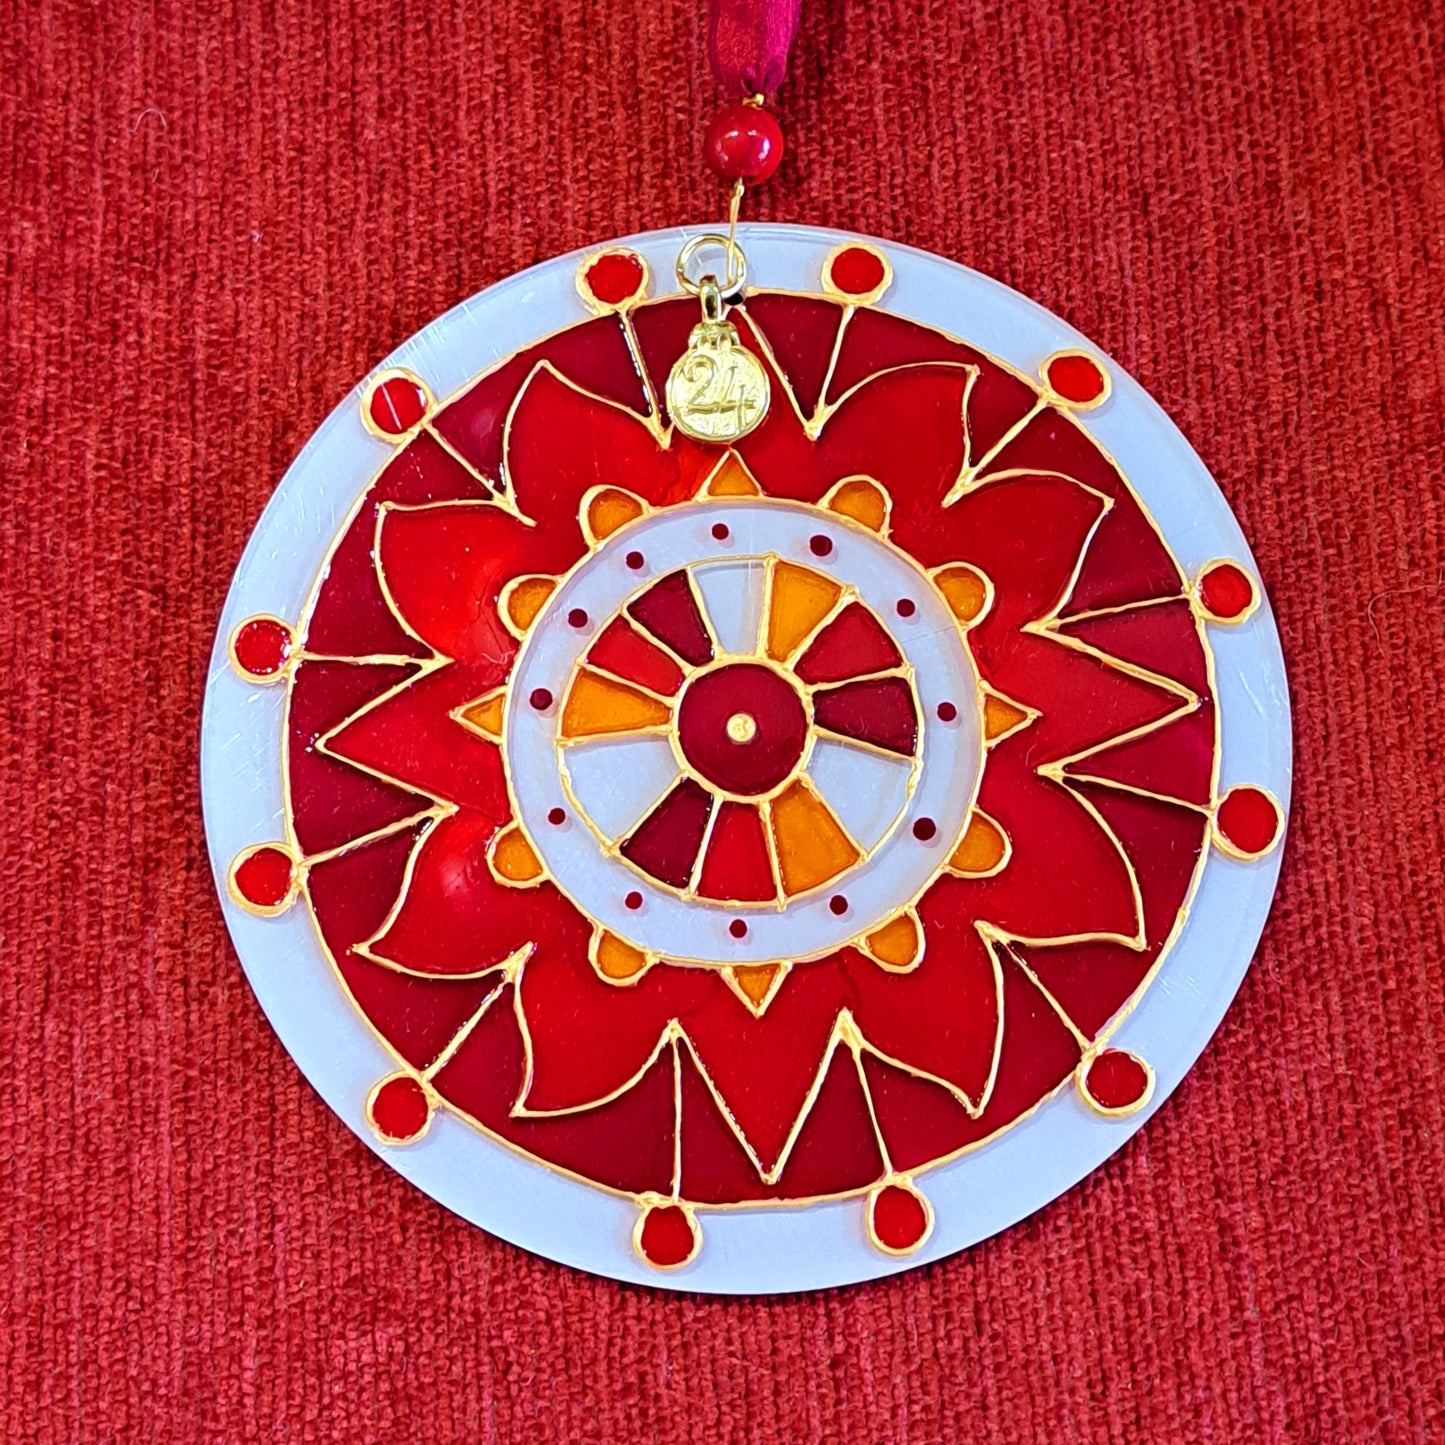 Mandala (I) lucky charm